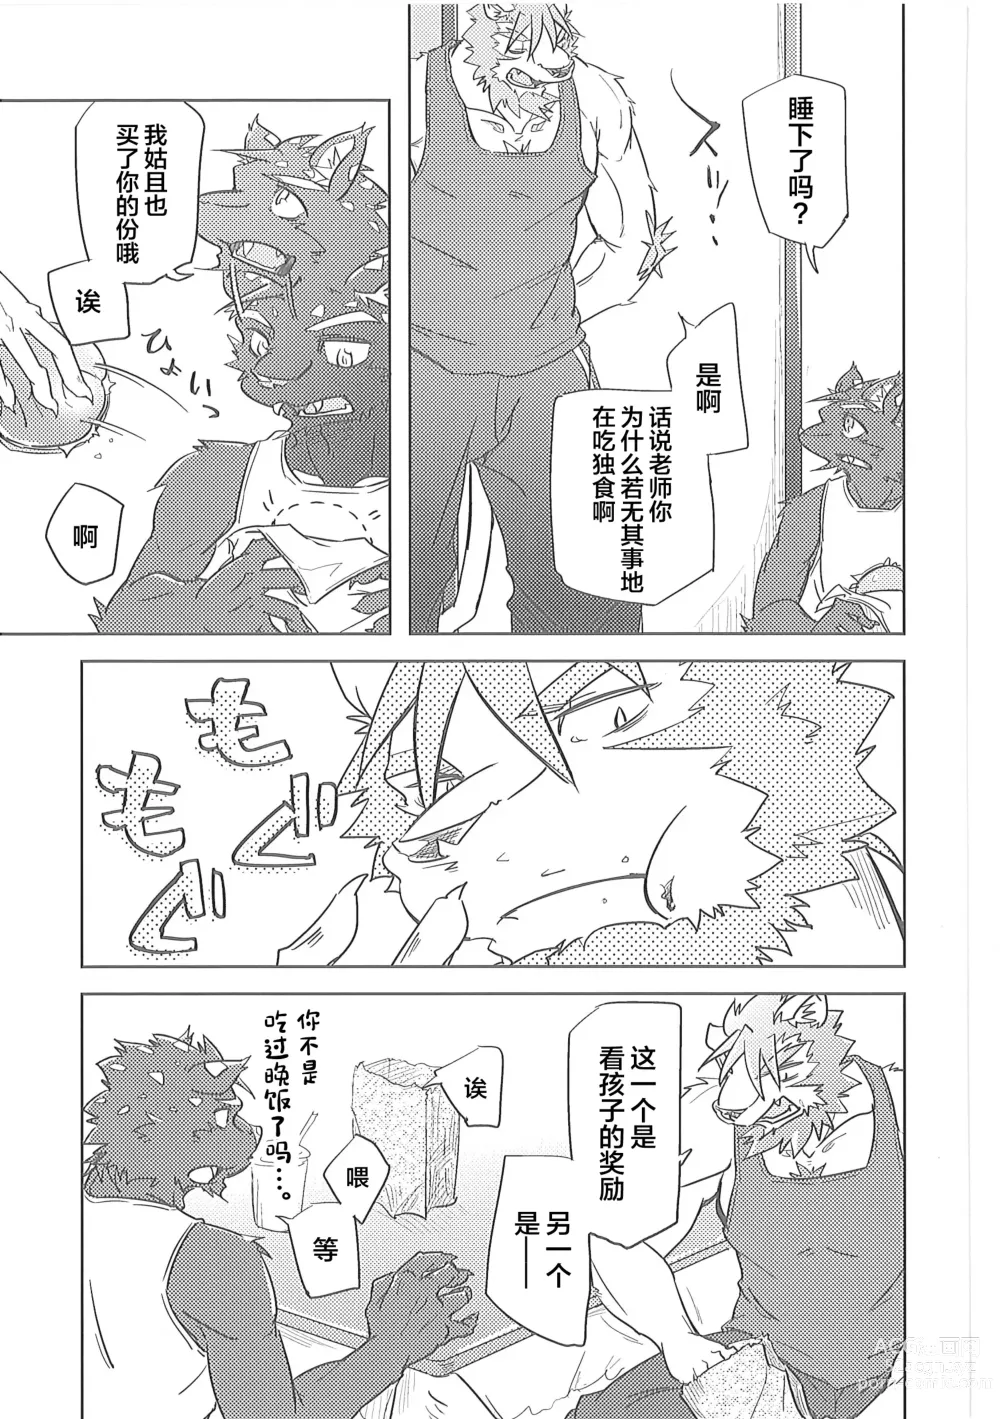 Page 12 of doujinshi Crazy Waltz